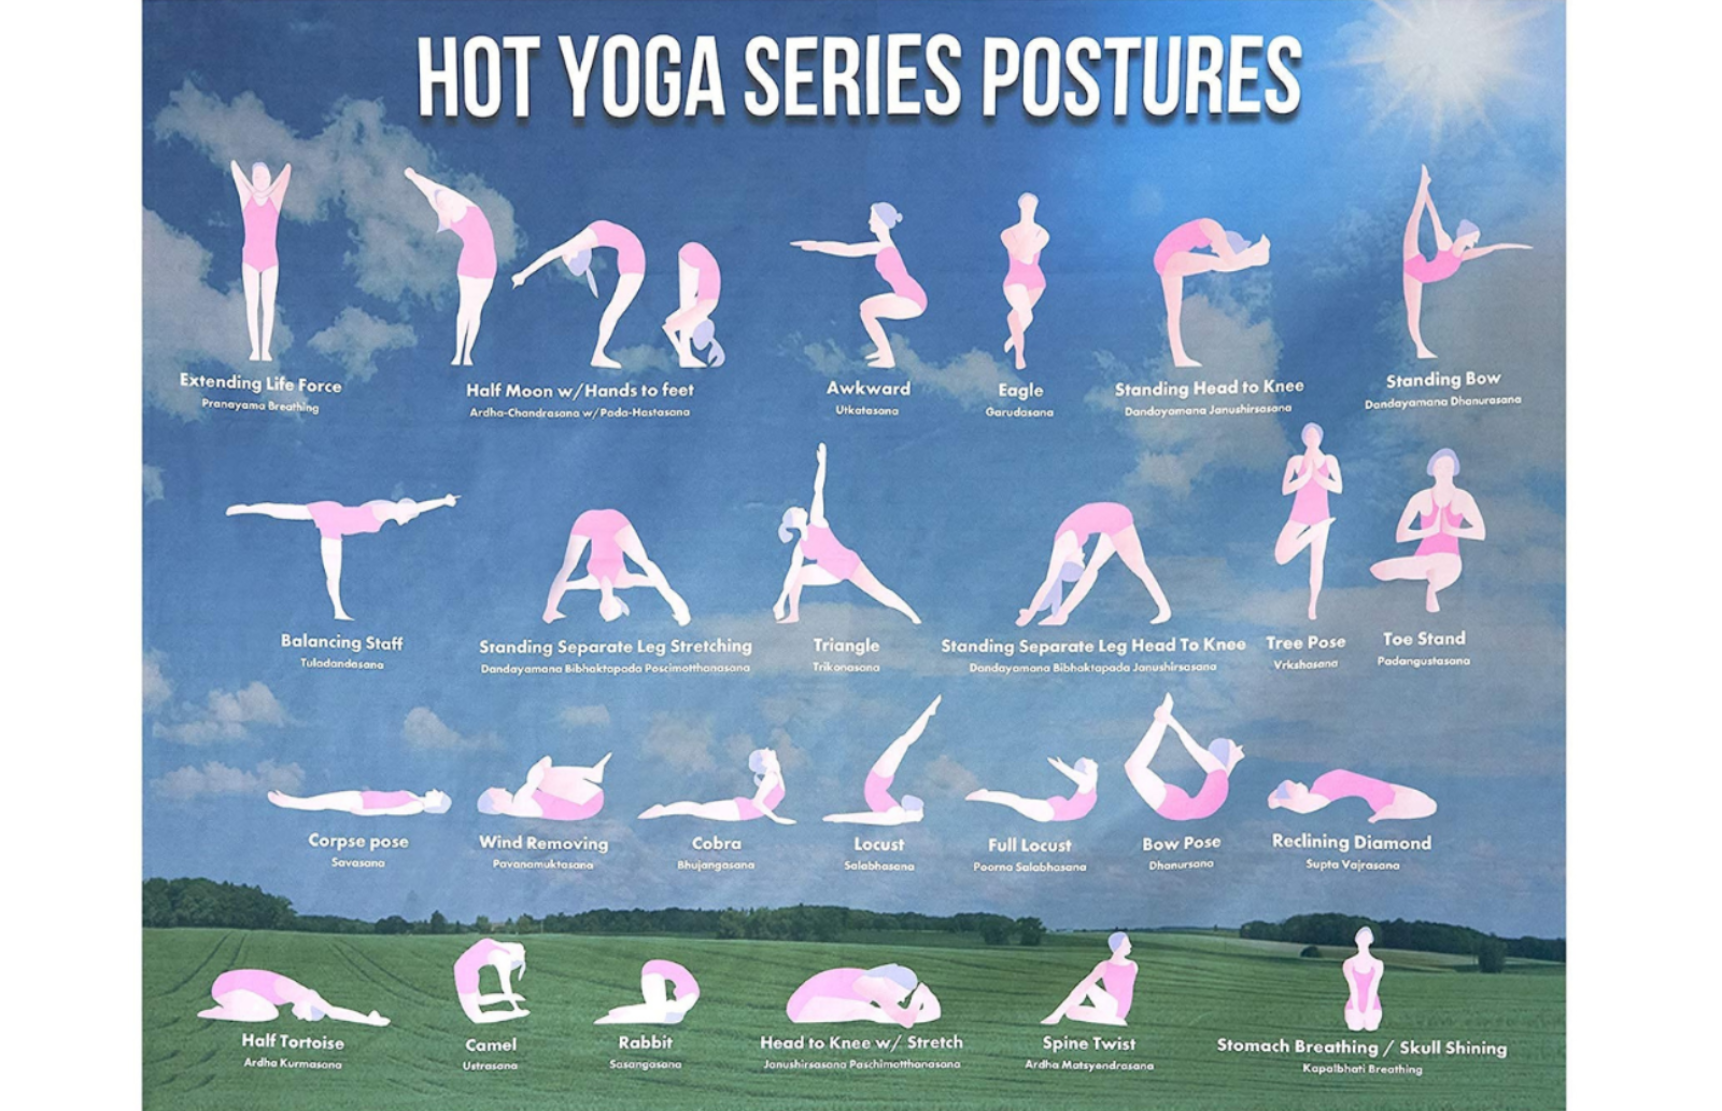 The Yoga - The Hot Room Encinitas